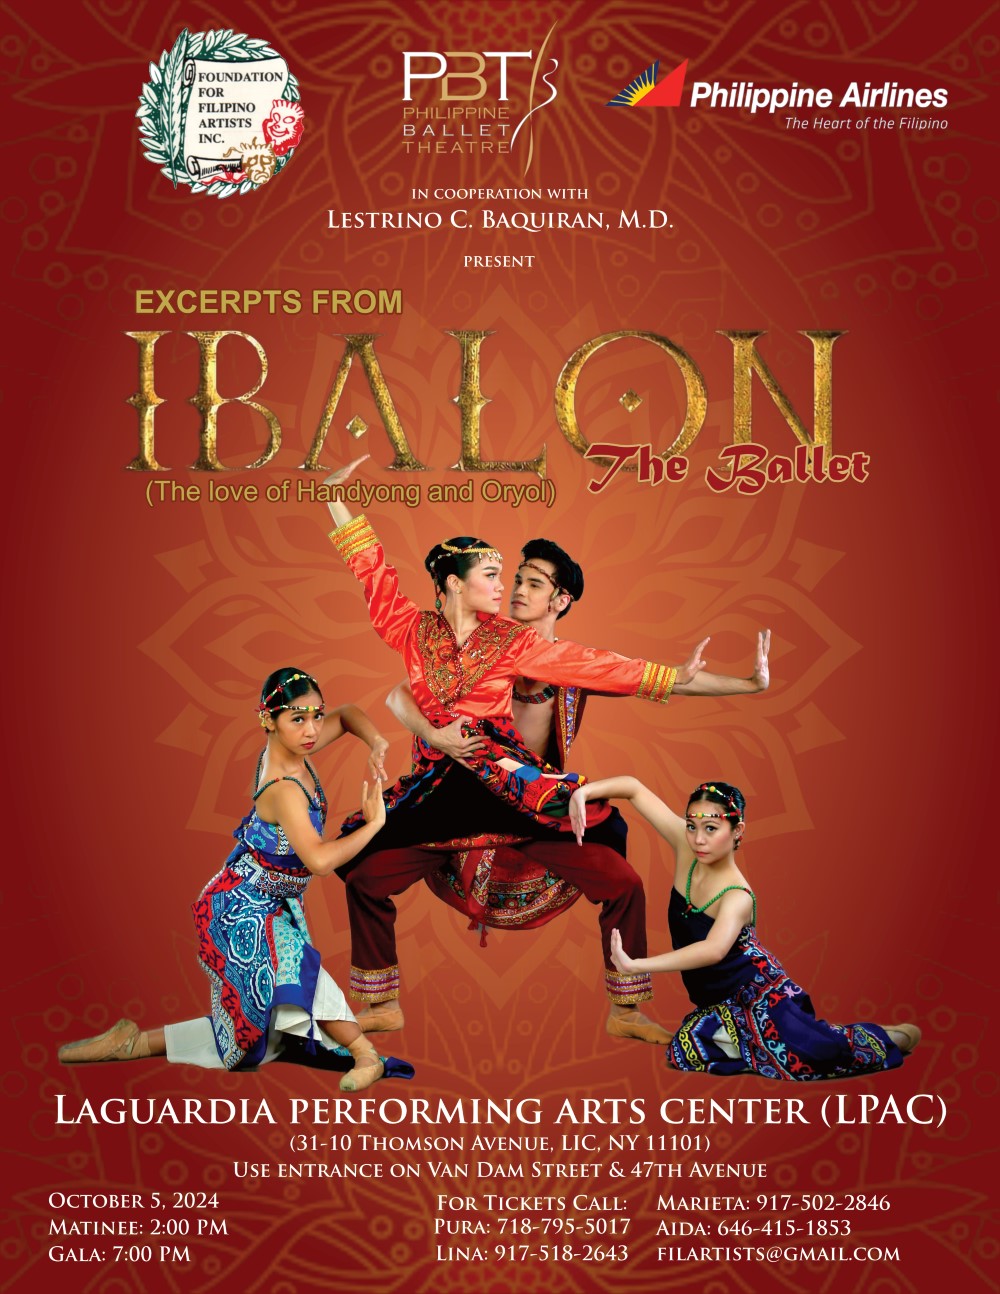 FFAI's 36th Anniversary Celebration - Ibalon The Ballet